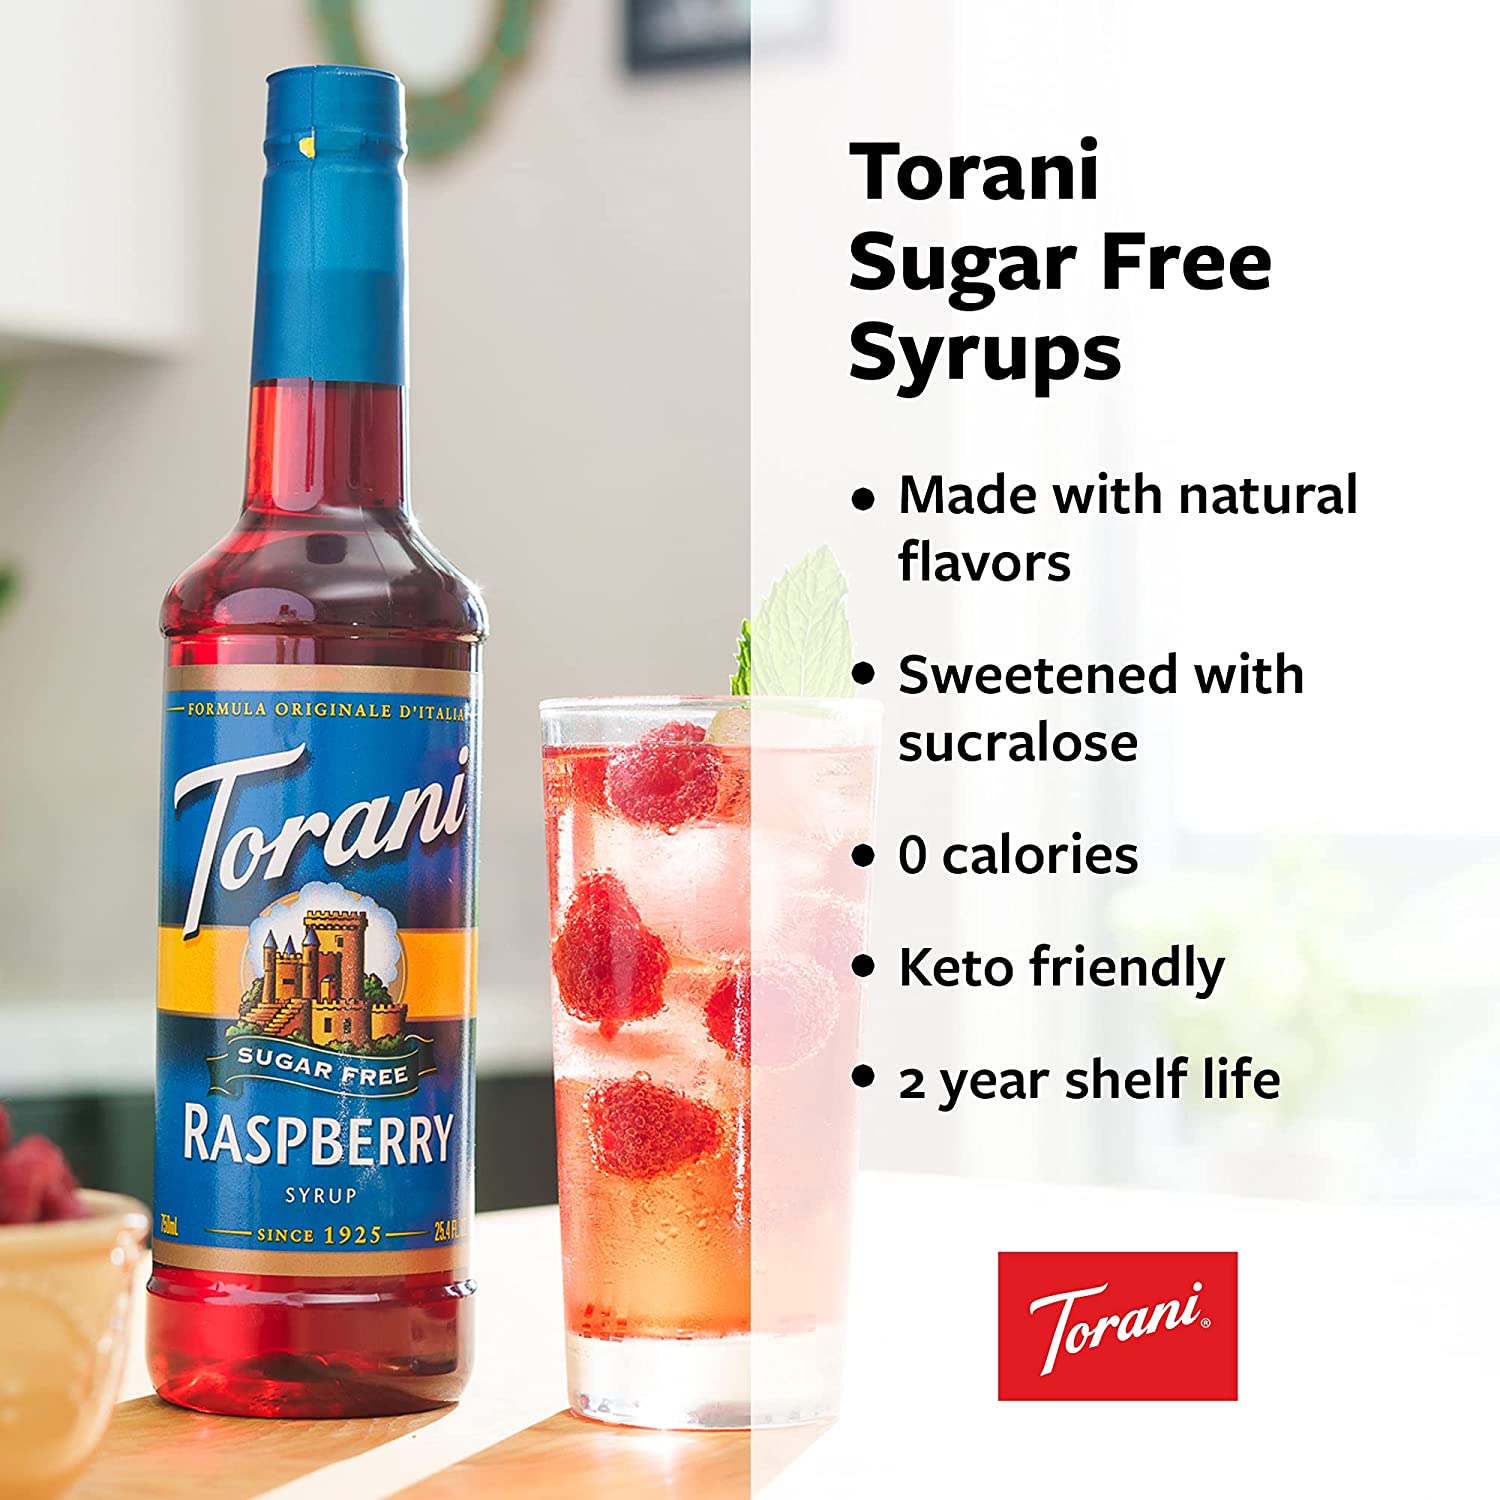 Torani Sugar Free Flavored Syrups - 750 ml Glass Bottle: Chocolate